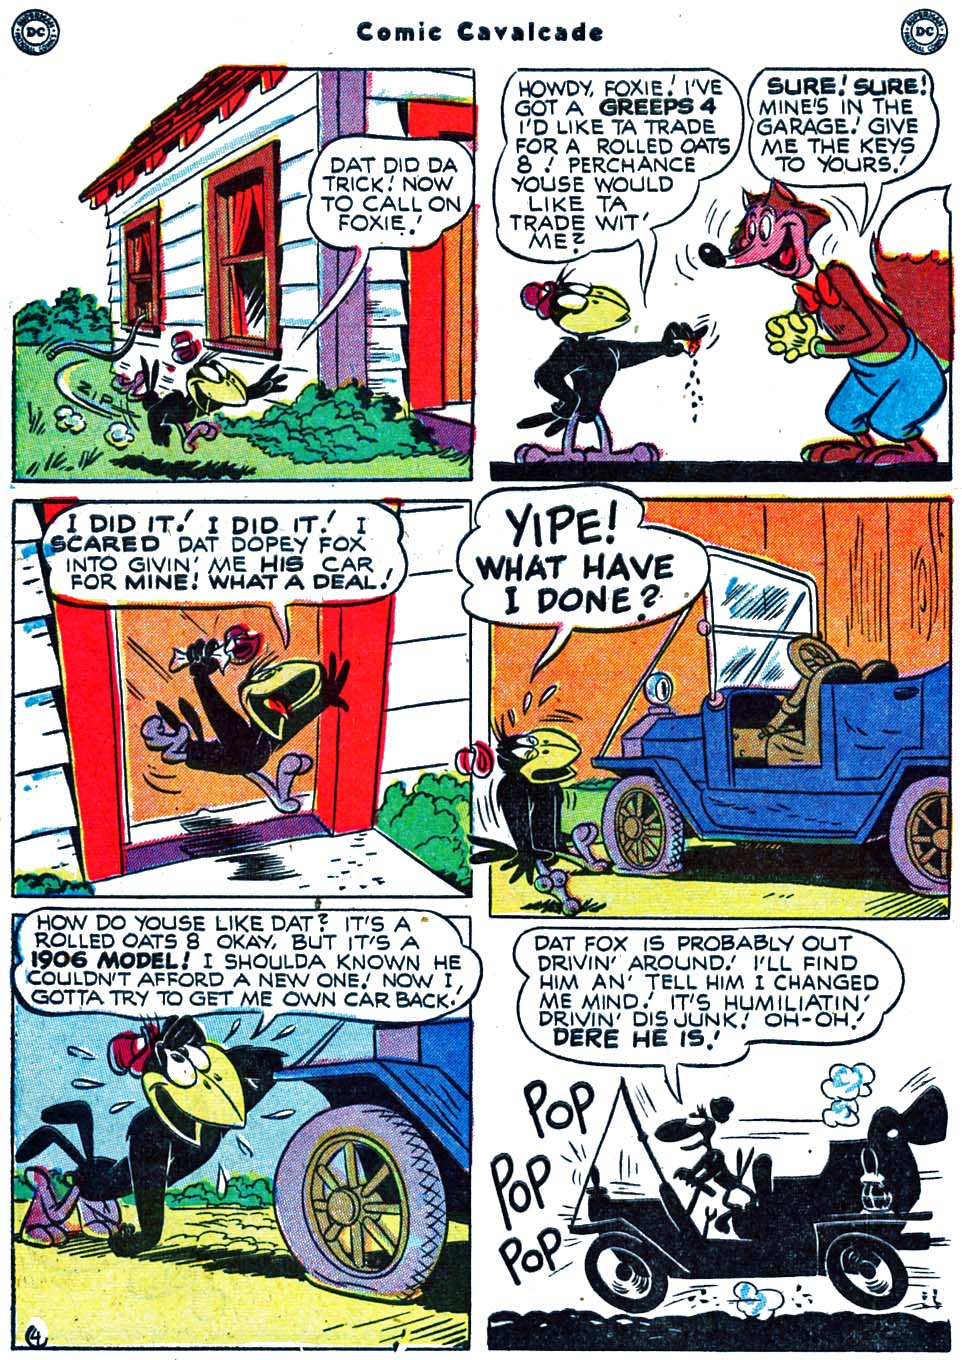 Comic Cavalcade issue 39 - Page 6